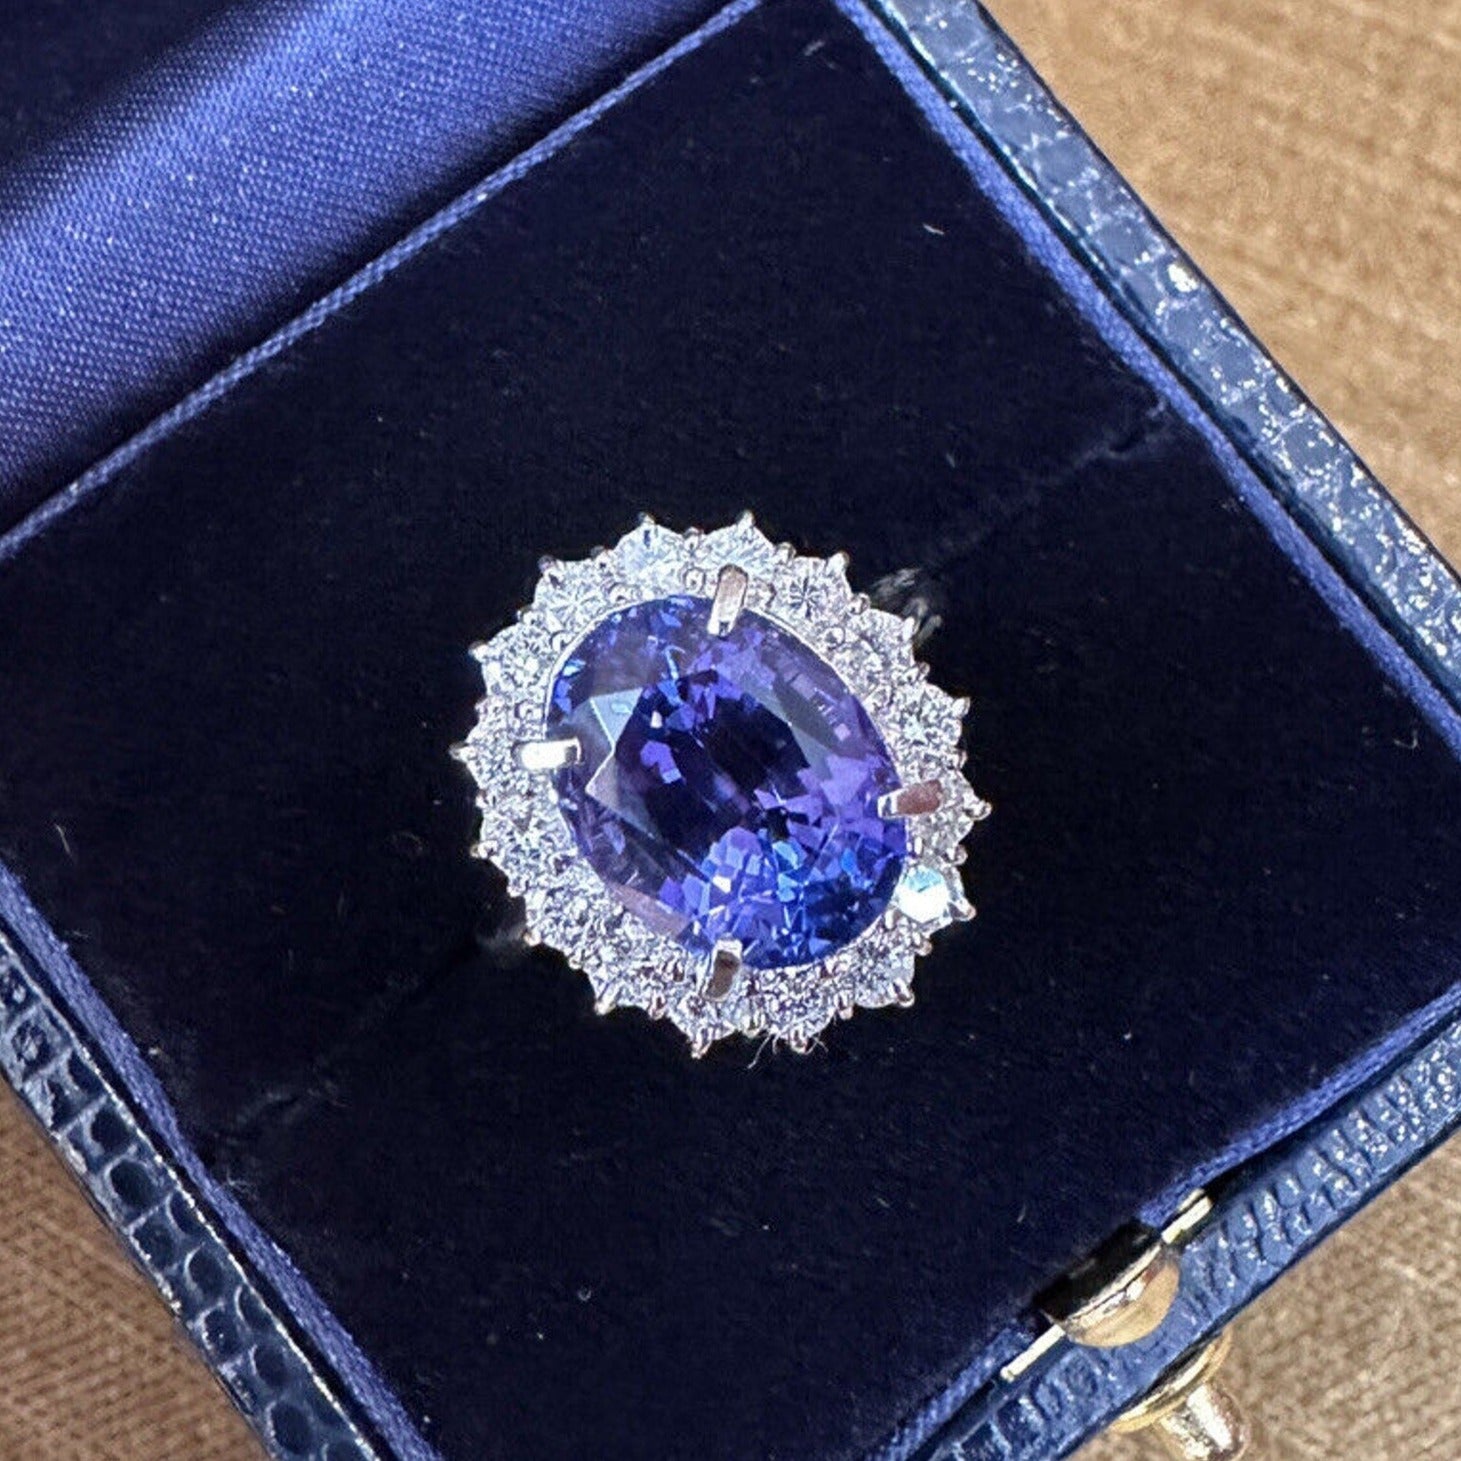 Estate 6.63 carats Oval Tanzanite Ring with Halo Diamond in Platinum